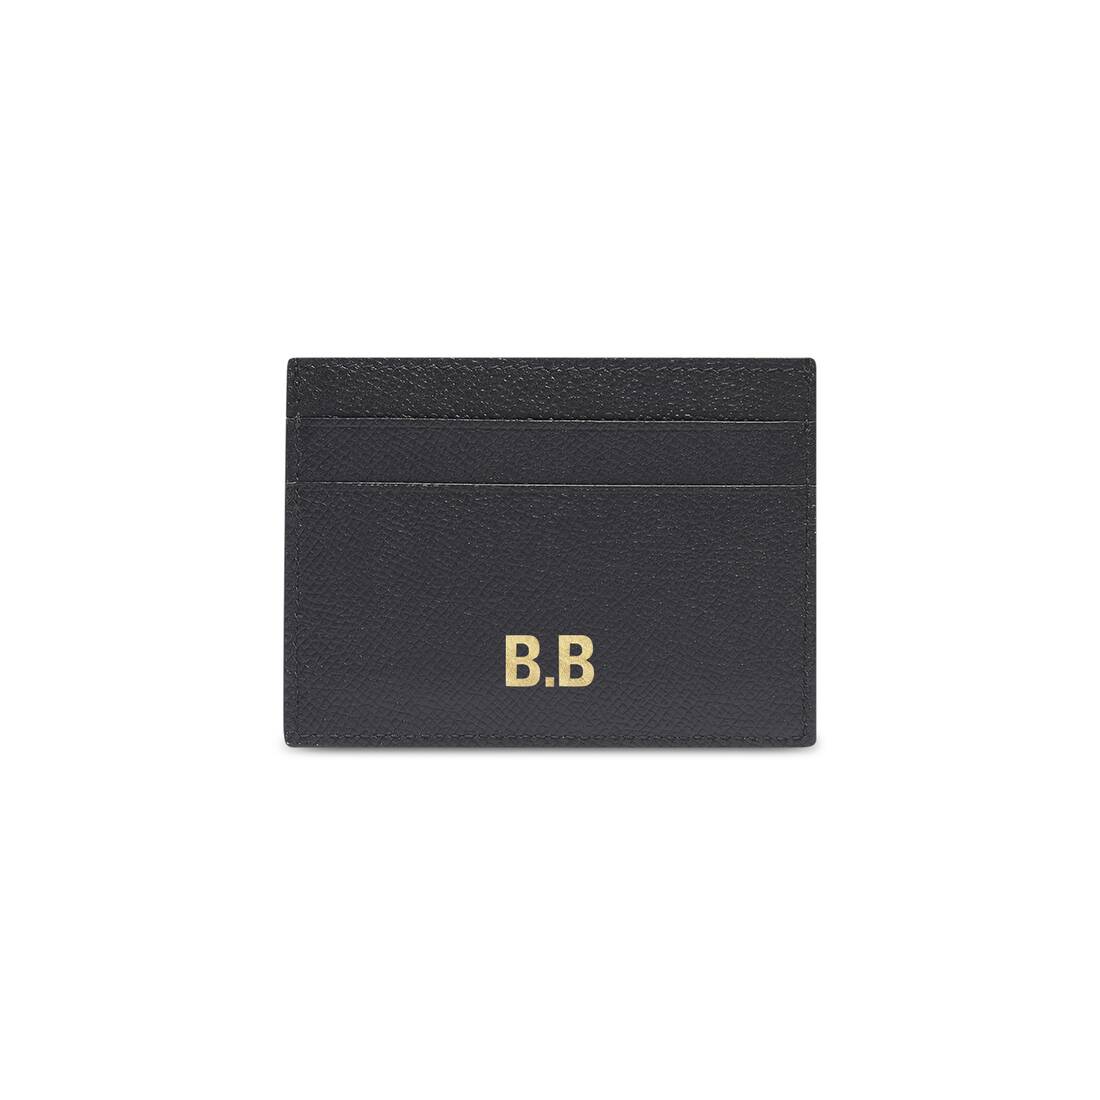 Balenciaga Men's Cash Folded Card Holder with Bill Clip